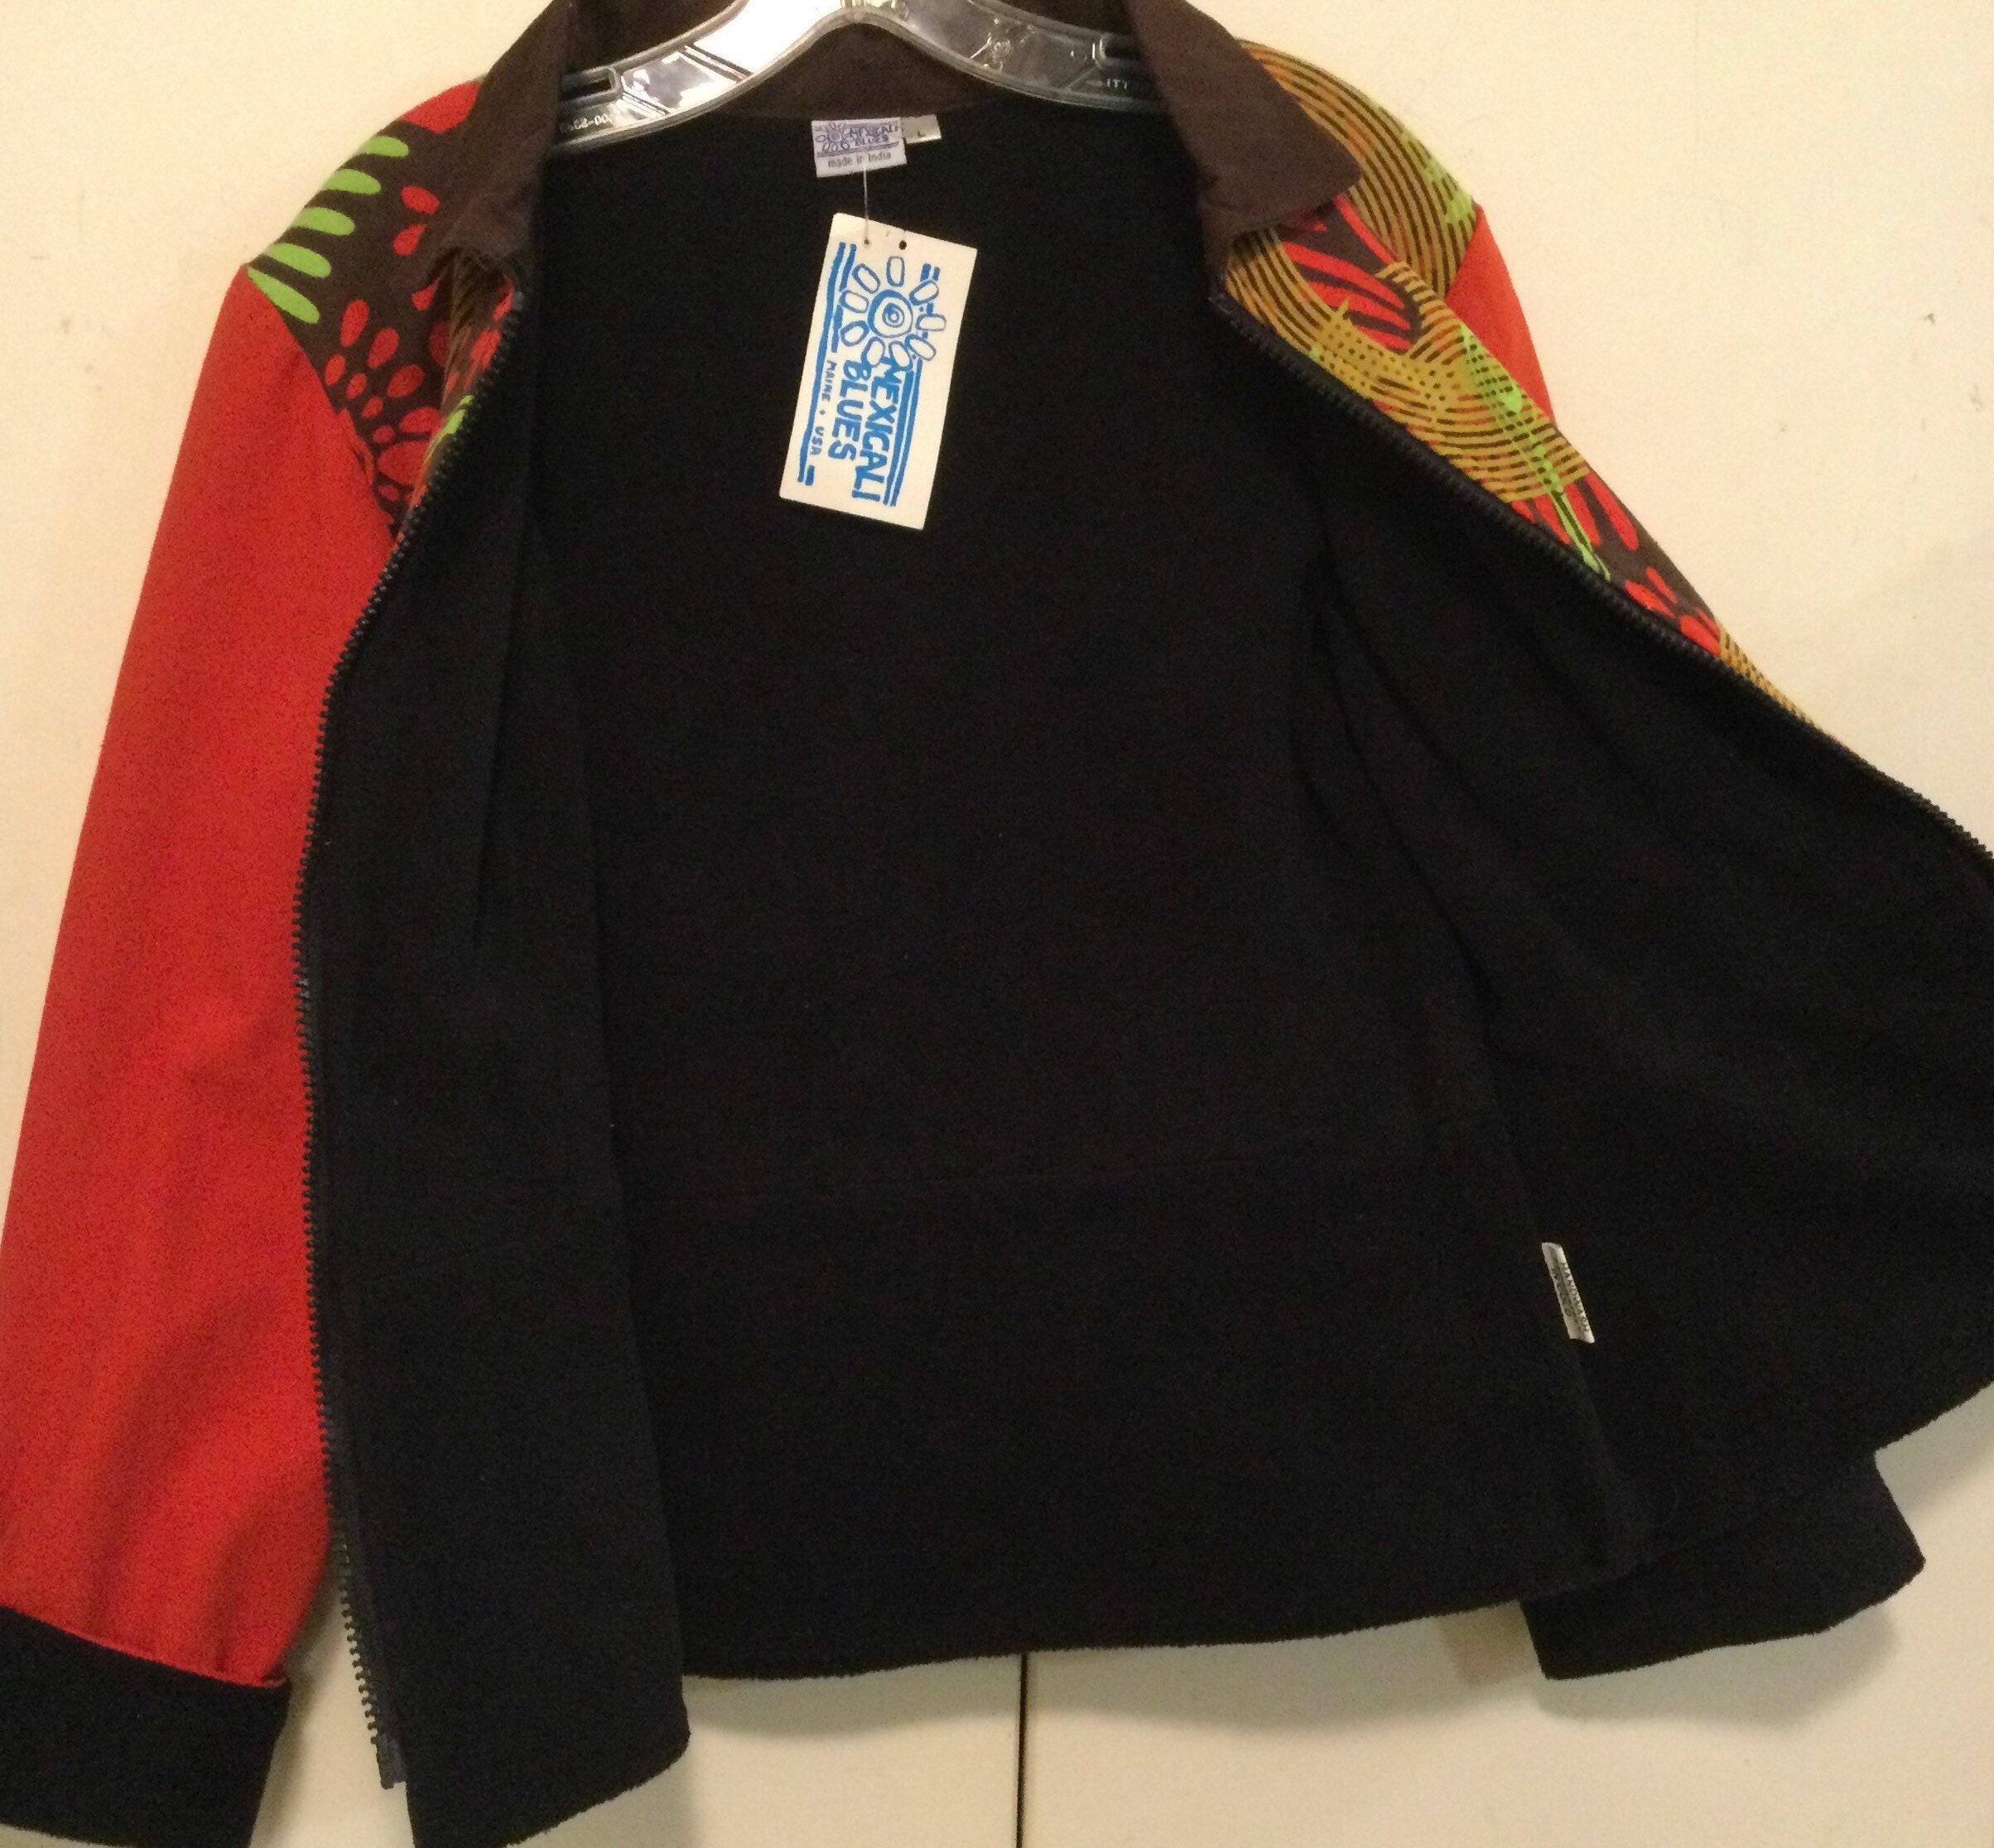 Reversible Fleece Jacket-shacket-coat/mexicali Blues/nwt